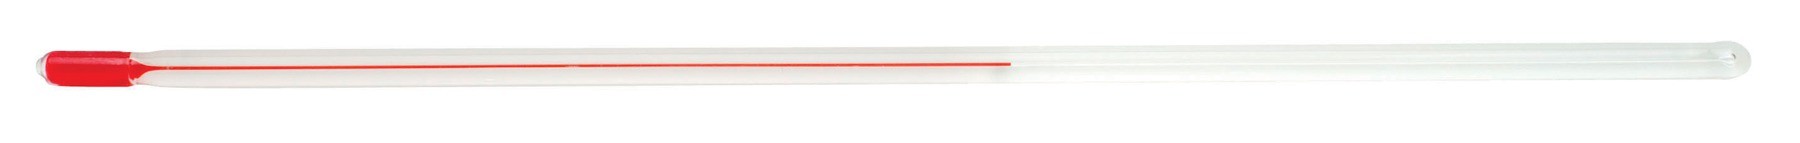 SP Bel-Art, H-B DURAC Liquid-In-Glass Ungraduated Thermometer; -20 to 110C (0 to 230F), Organic Liquid Filled